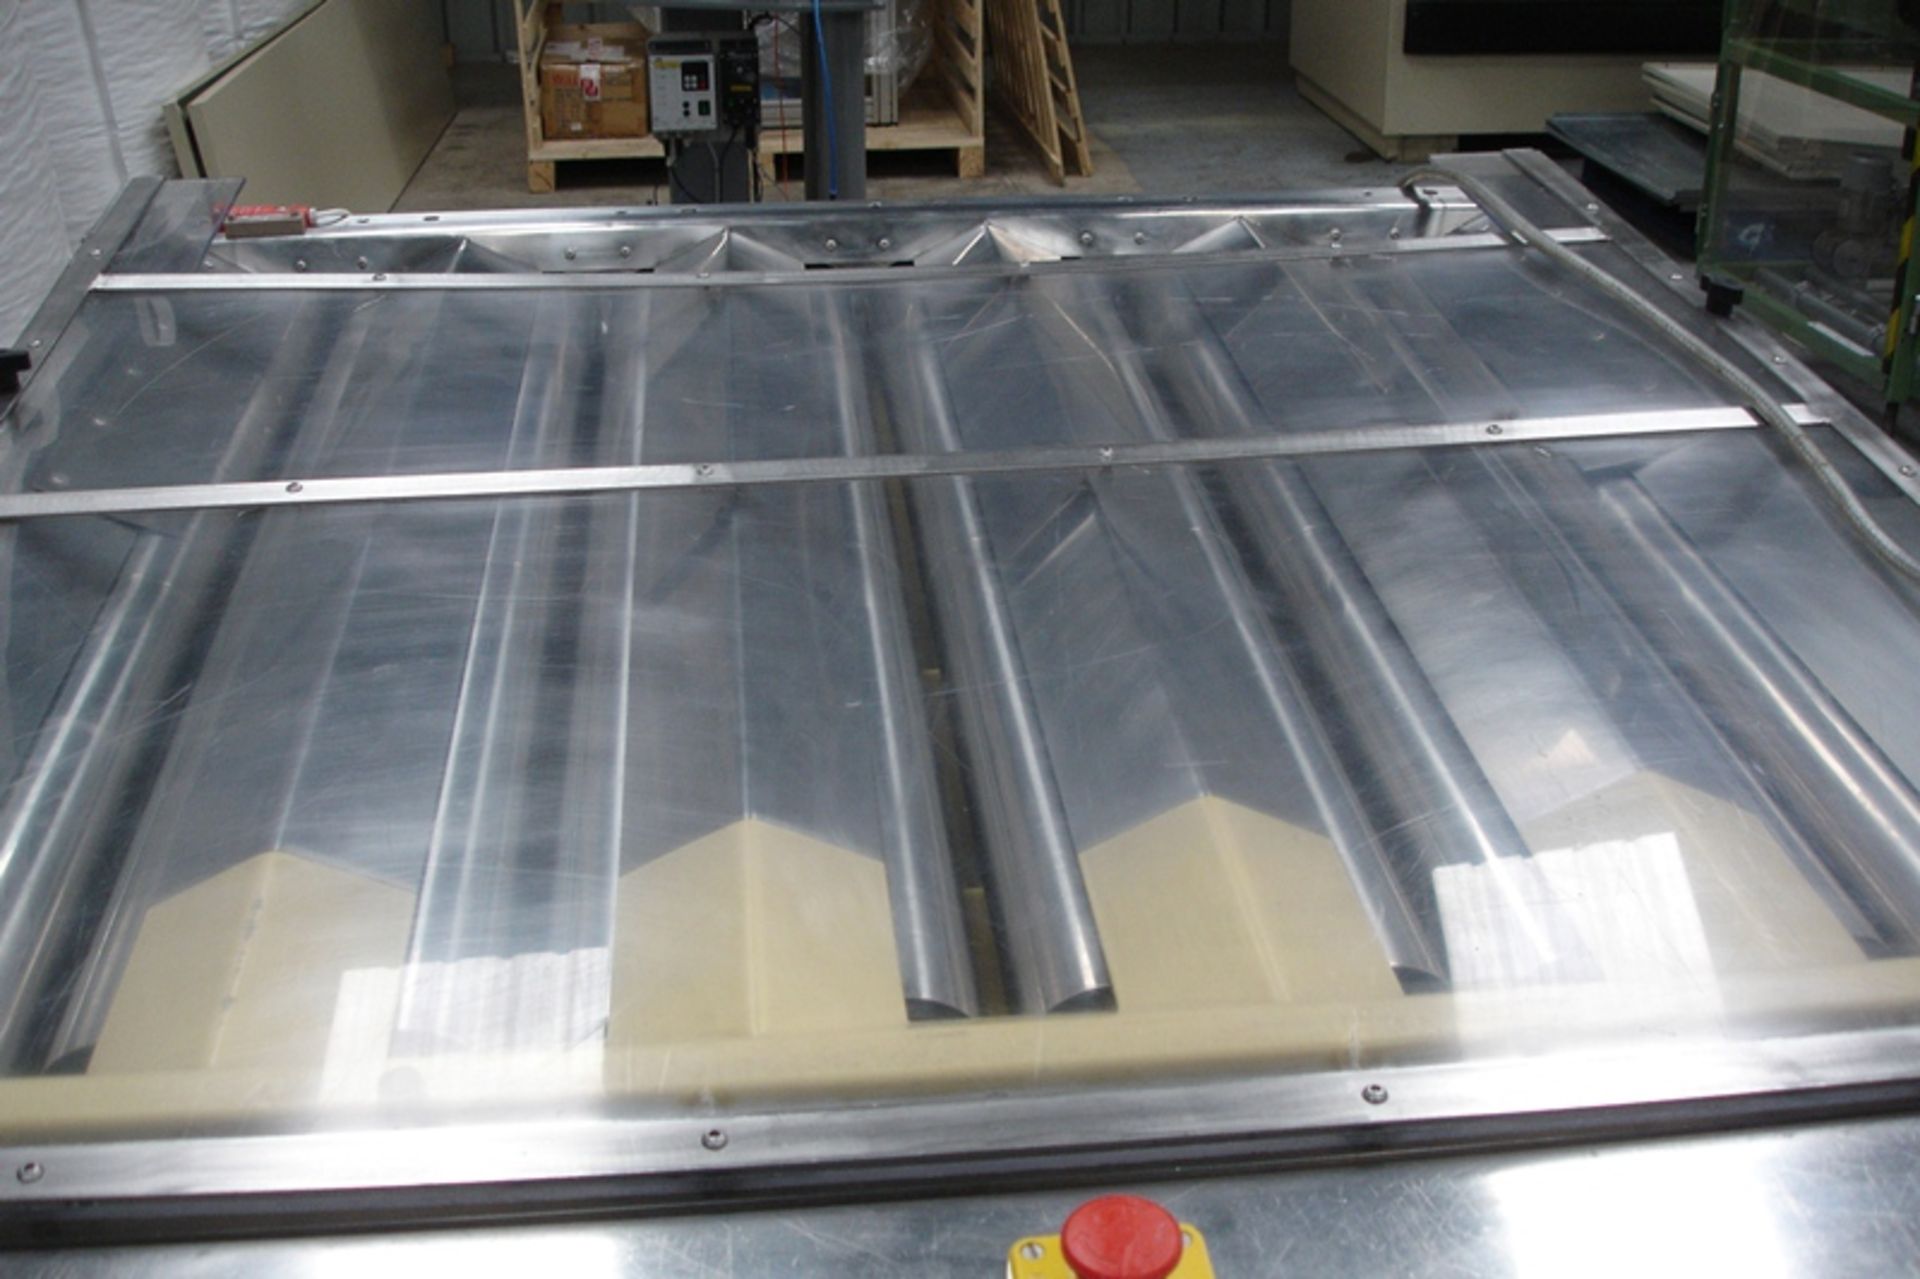 Fully Stainless Steel food grade 5 lane Grading/Sizing Machine - Image 4 of 7